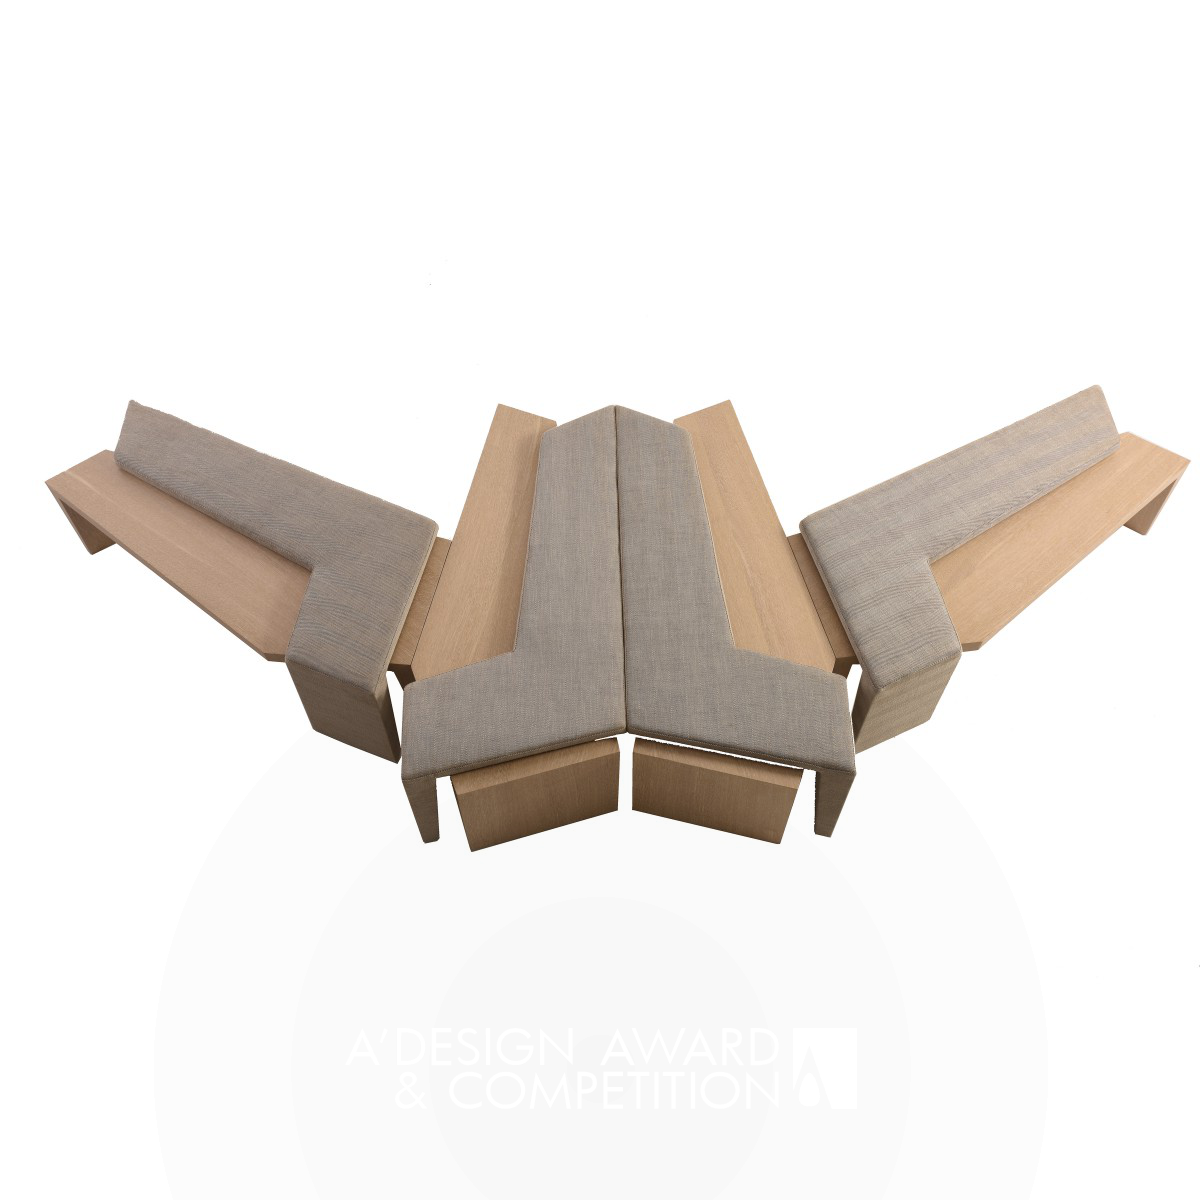 Tangram stool by Kris Lin